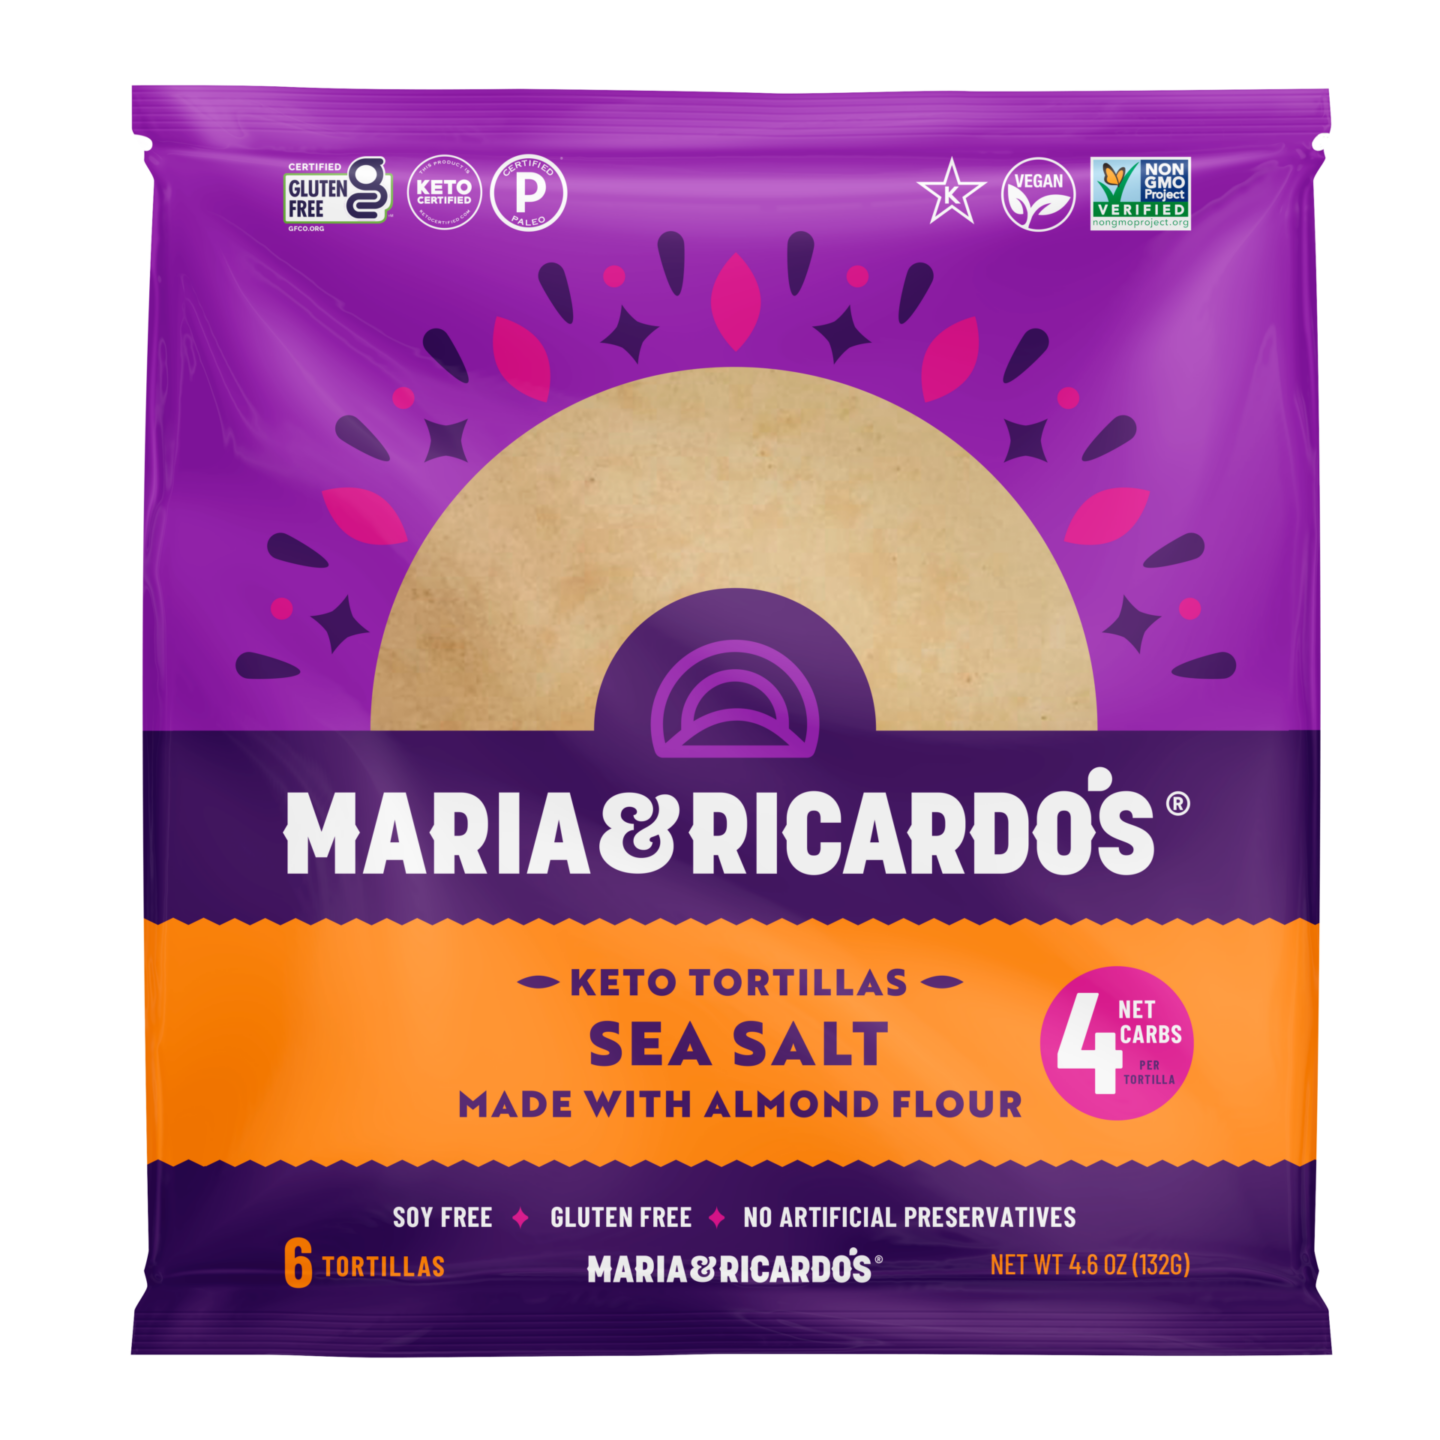 Maria & Ricardo's Sea Salt Keto Tortillas #gfreetortillas #almondflourtortillas